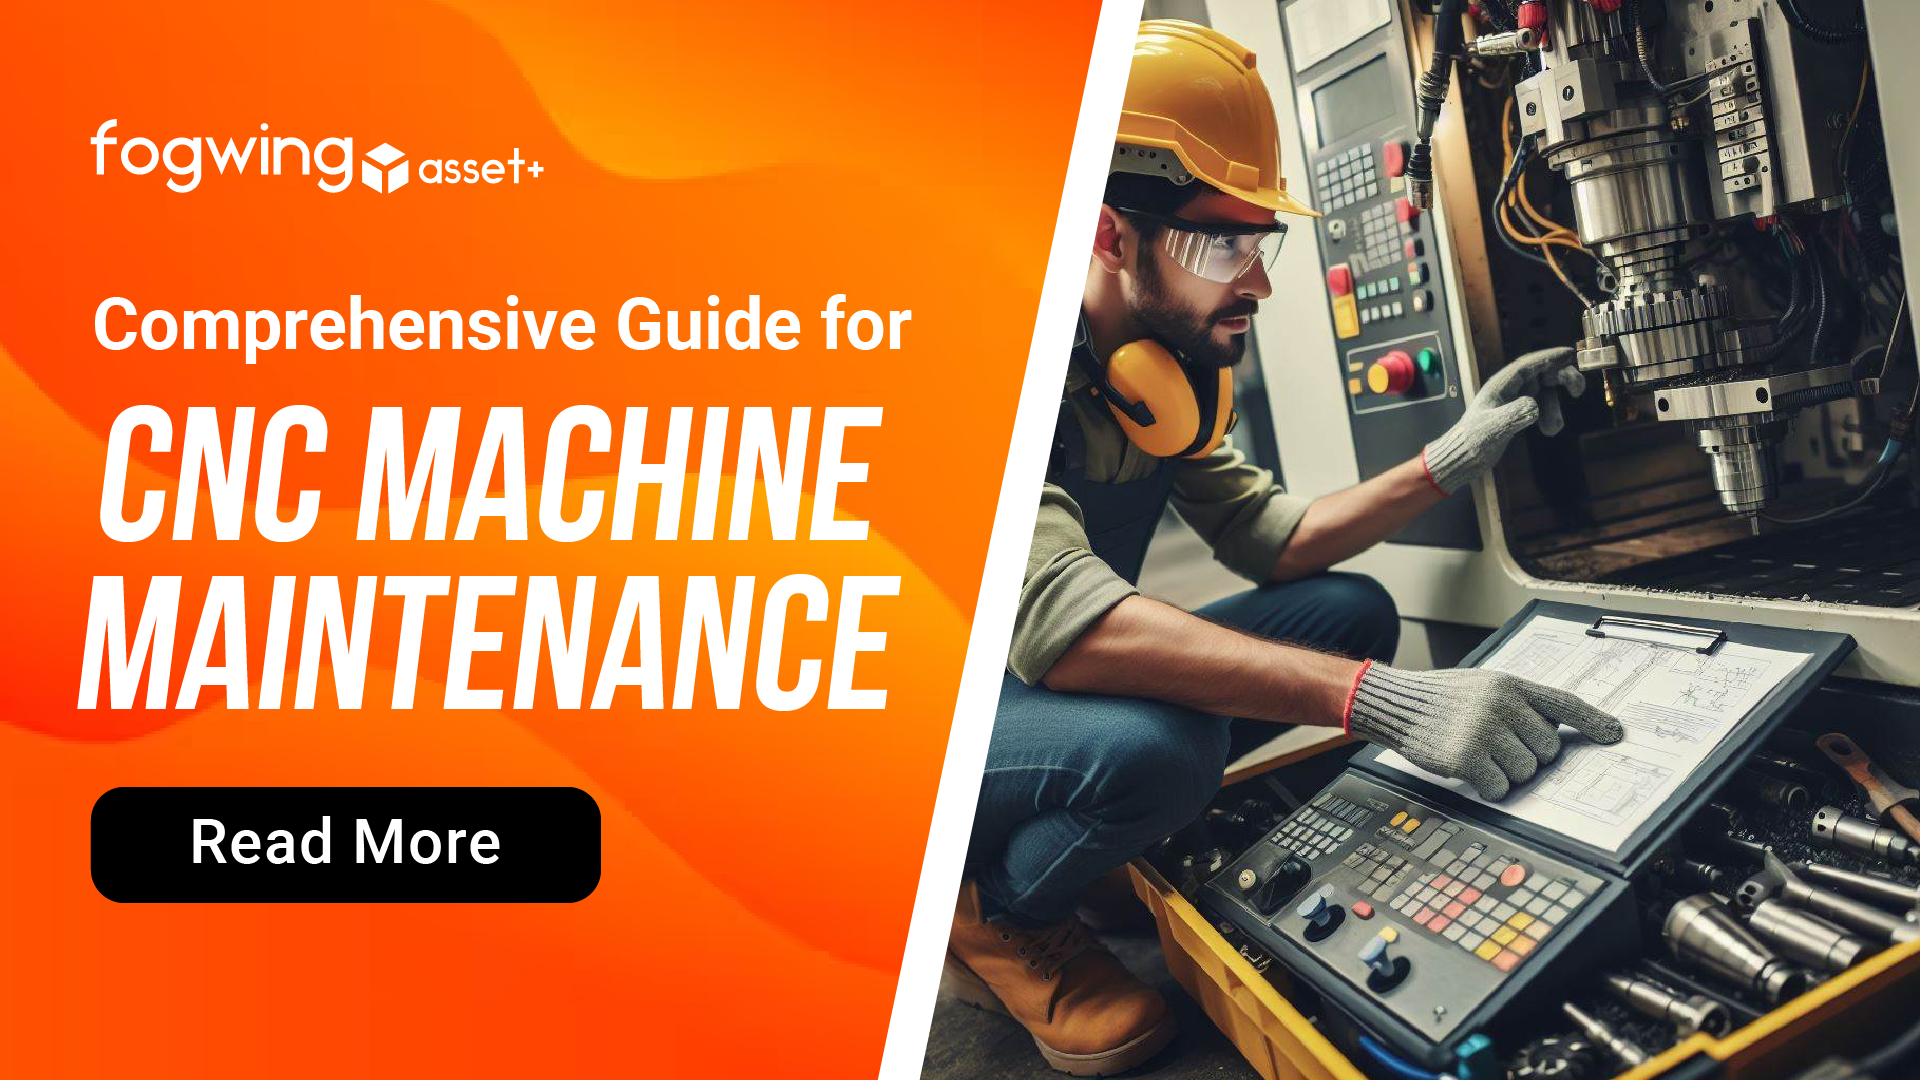 cnc machine maintenance featured image for blog